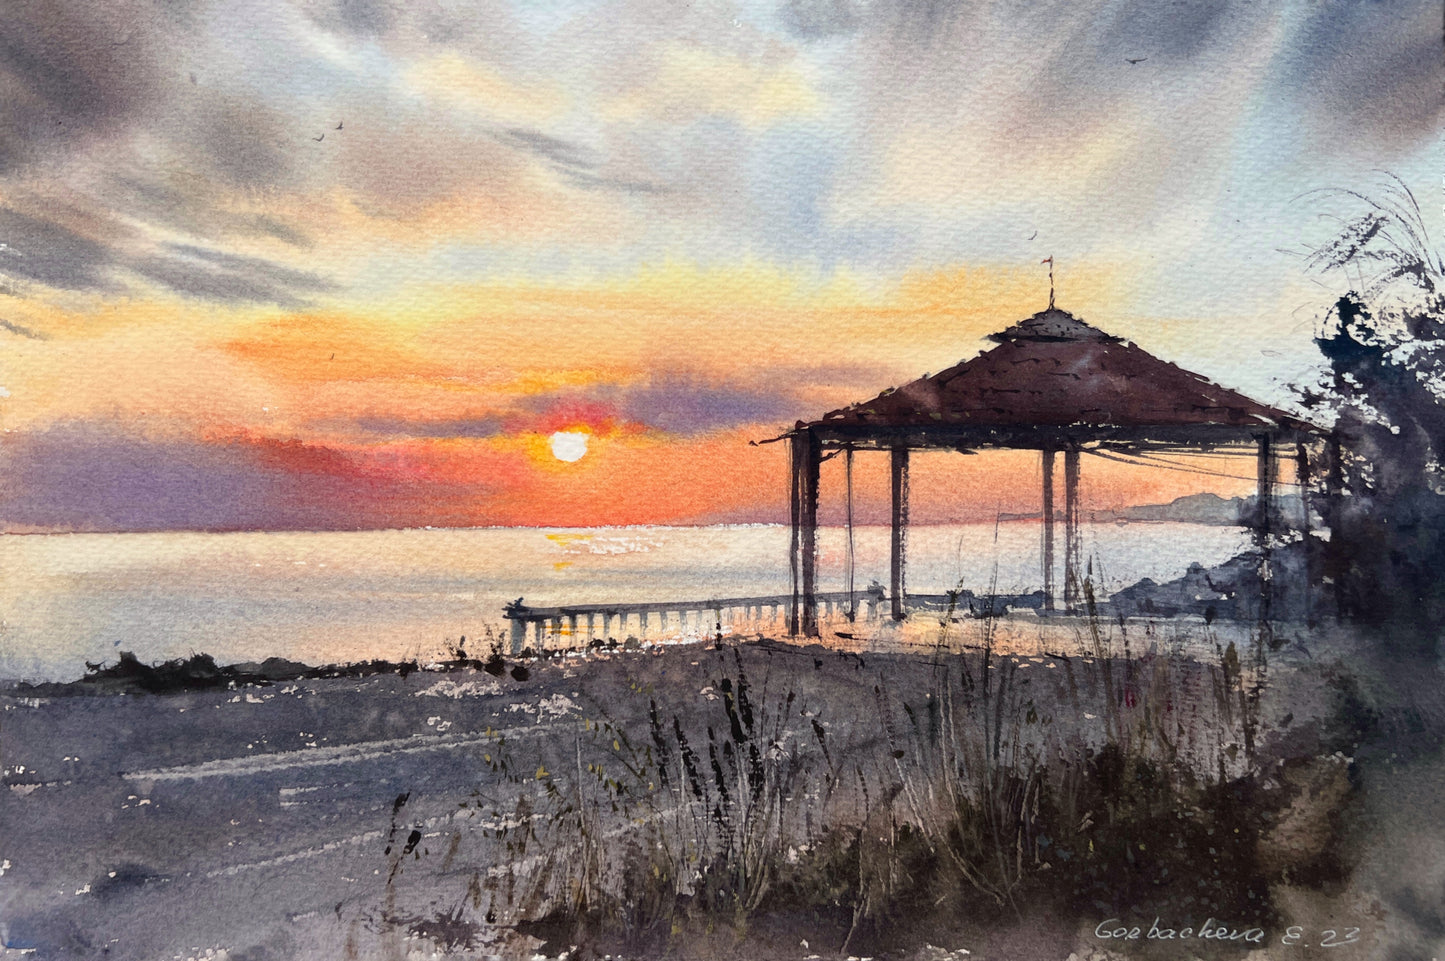 Sea Sunset Painting, Watercolor Original Seascape, Cyprus Landscape, Ocean Wall Art, Modern Art Boho